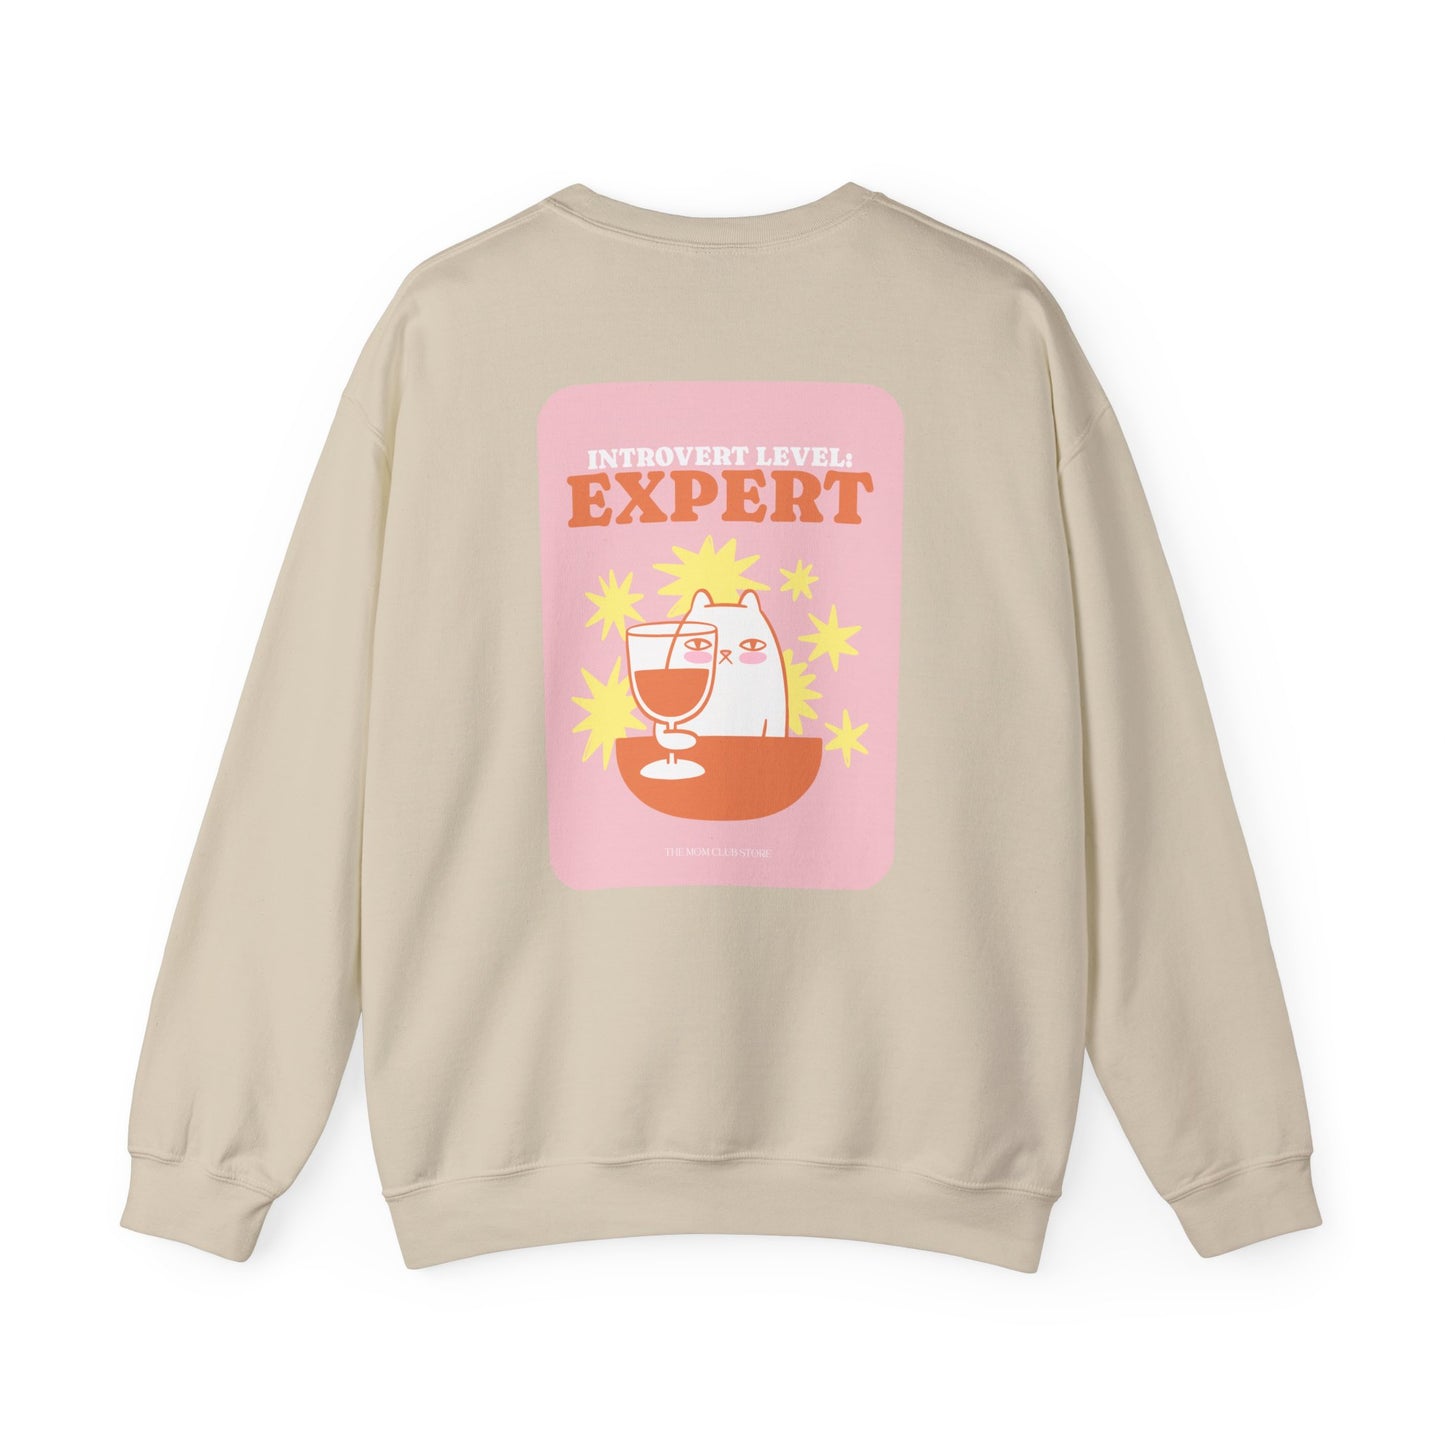 Crewneck sweatshirt -introvert level EXPERT- for adults